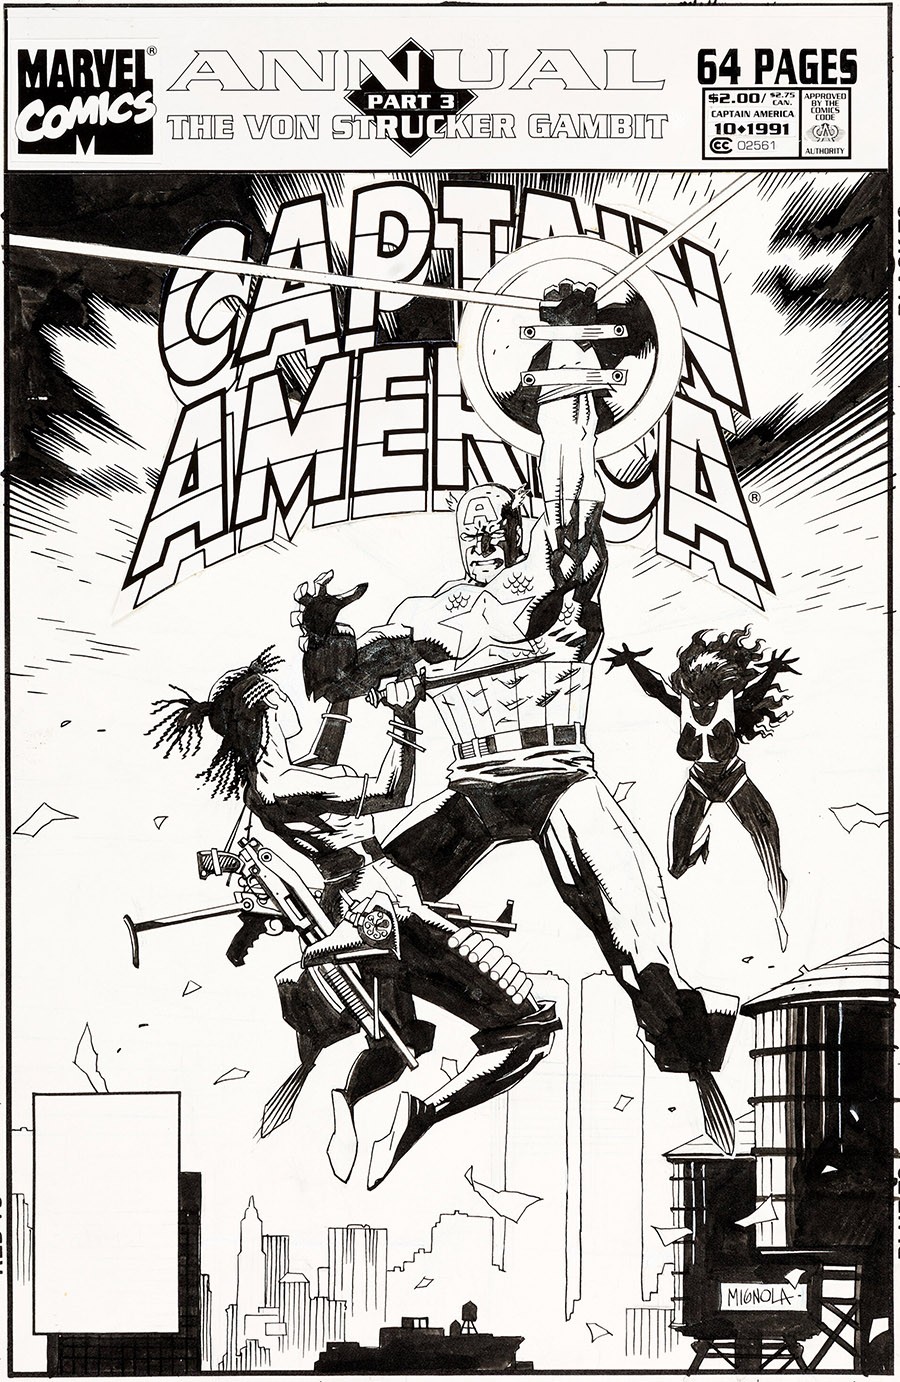 Cover art for “Captain America Annual,” no.10, 1991